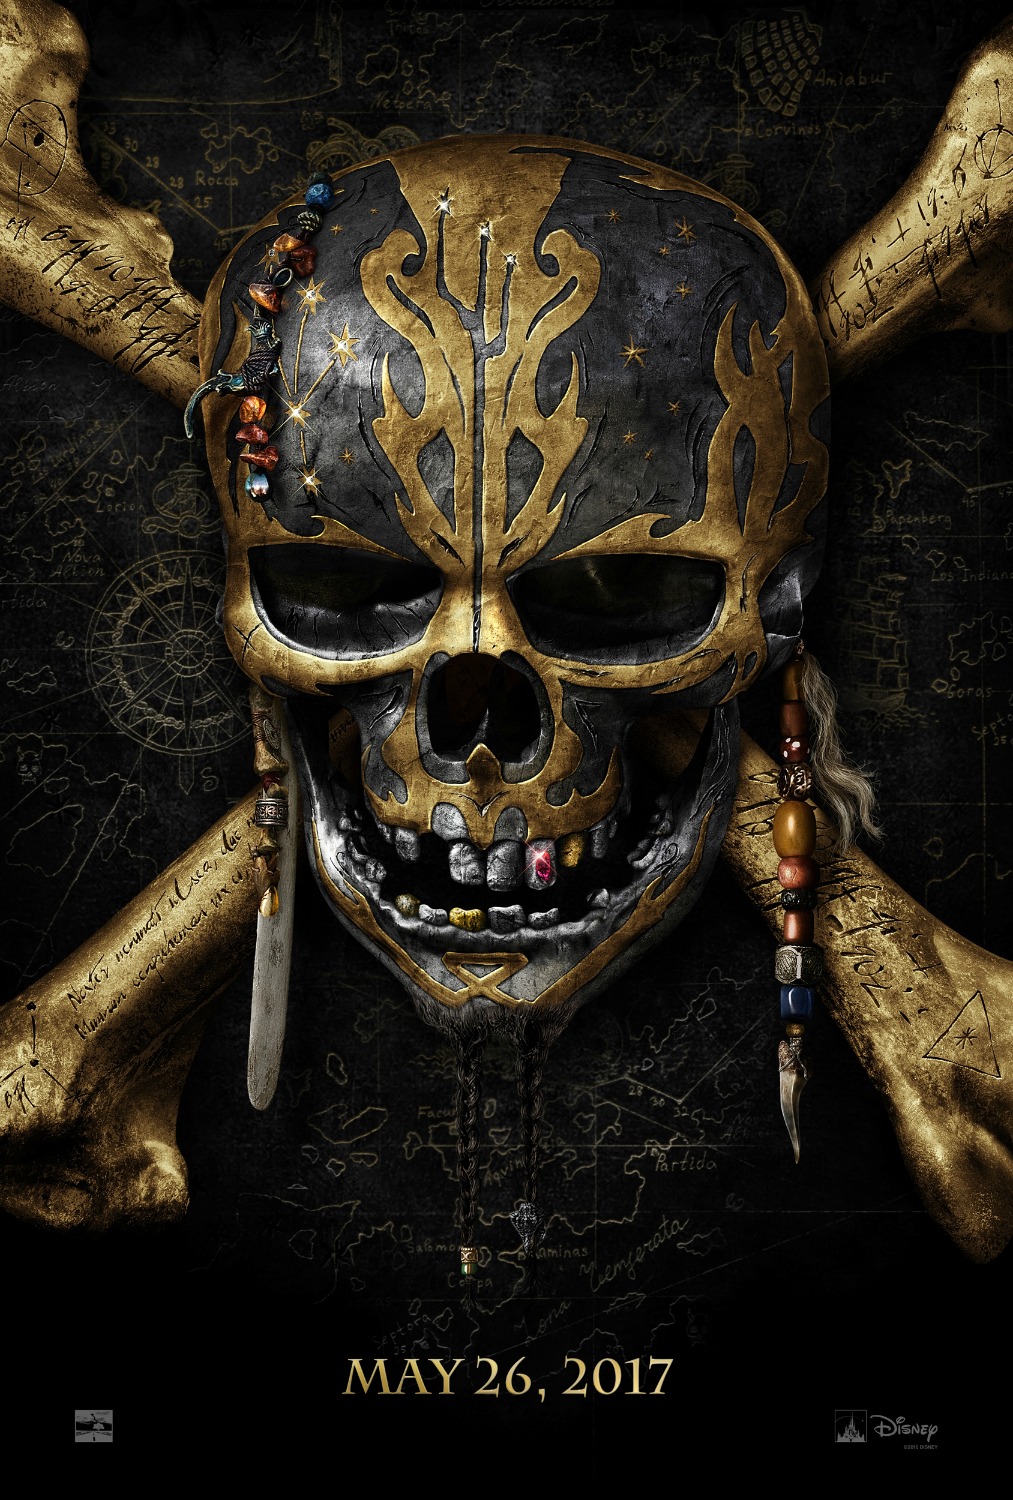 Pirates of the Caribbean: Dead Men Tell No Tales #PiratesOfTheCaribbean